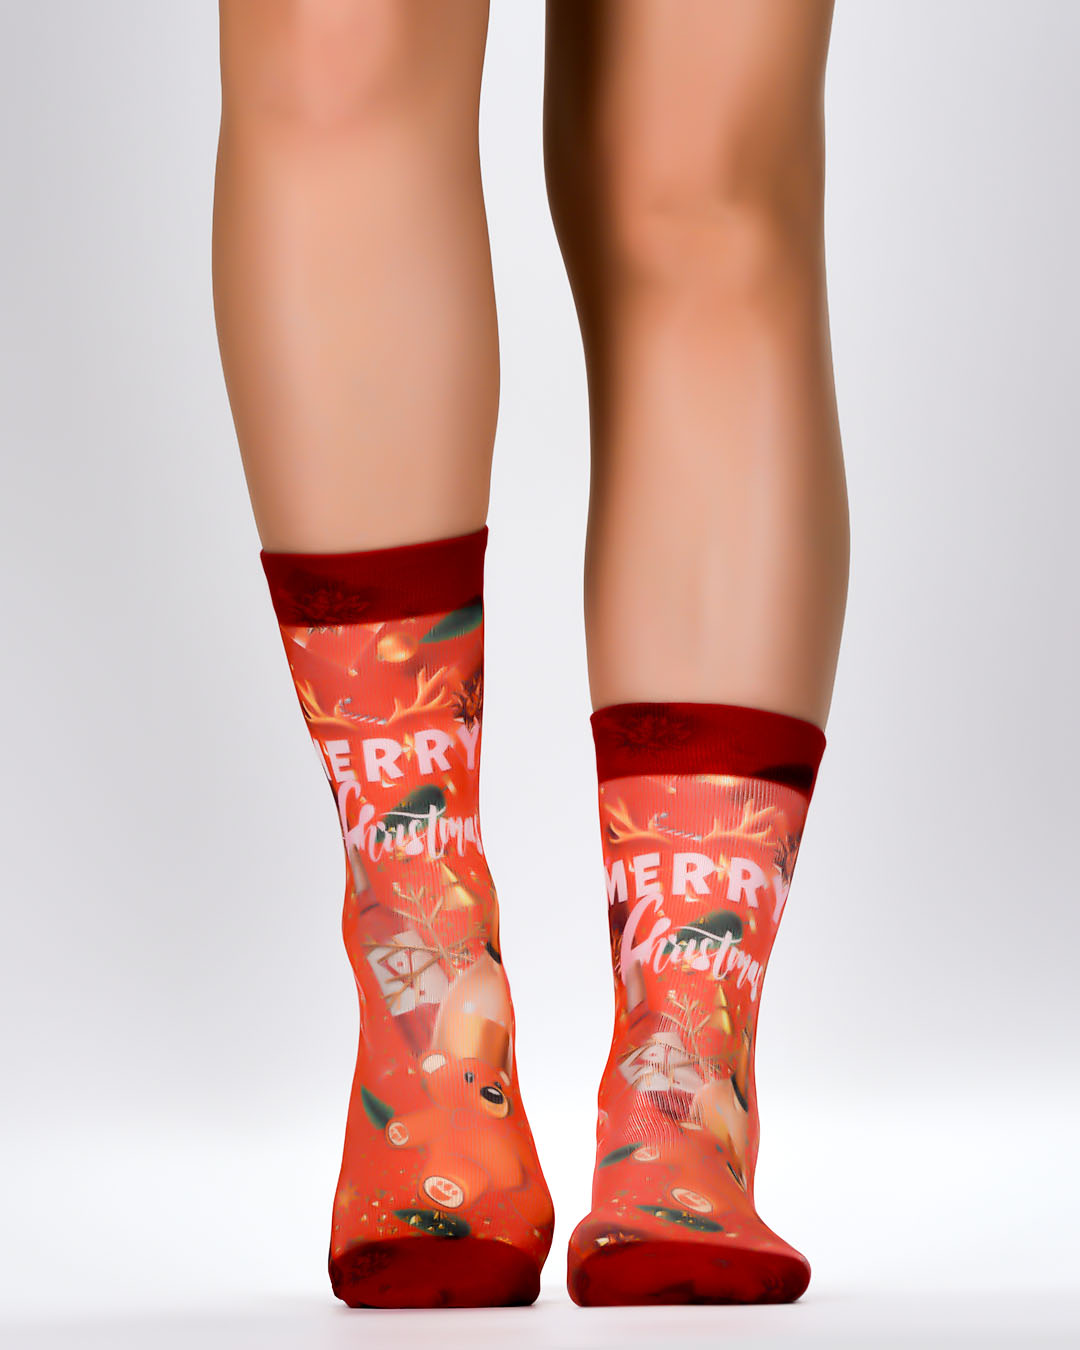 Socken wigglesteps Lady Socks Christmas Champagne Size 36-40 / Weihnachtssocken